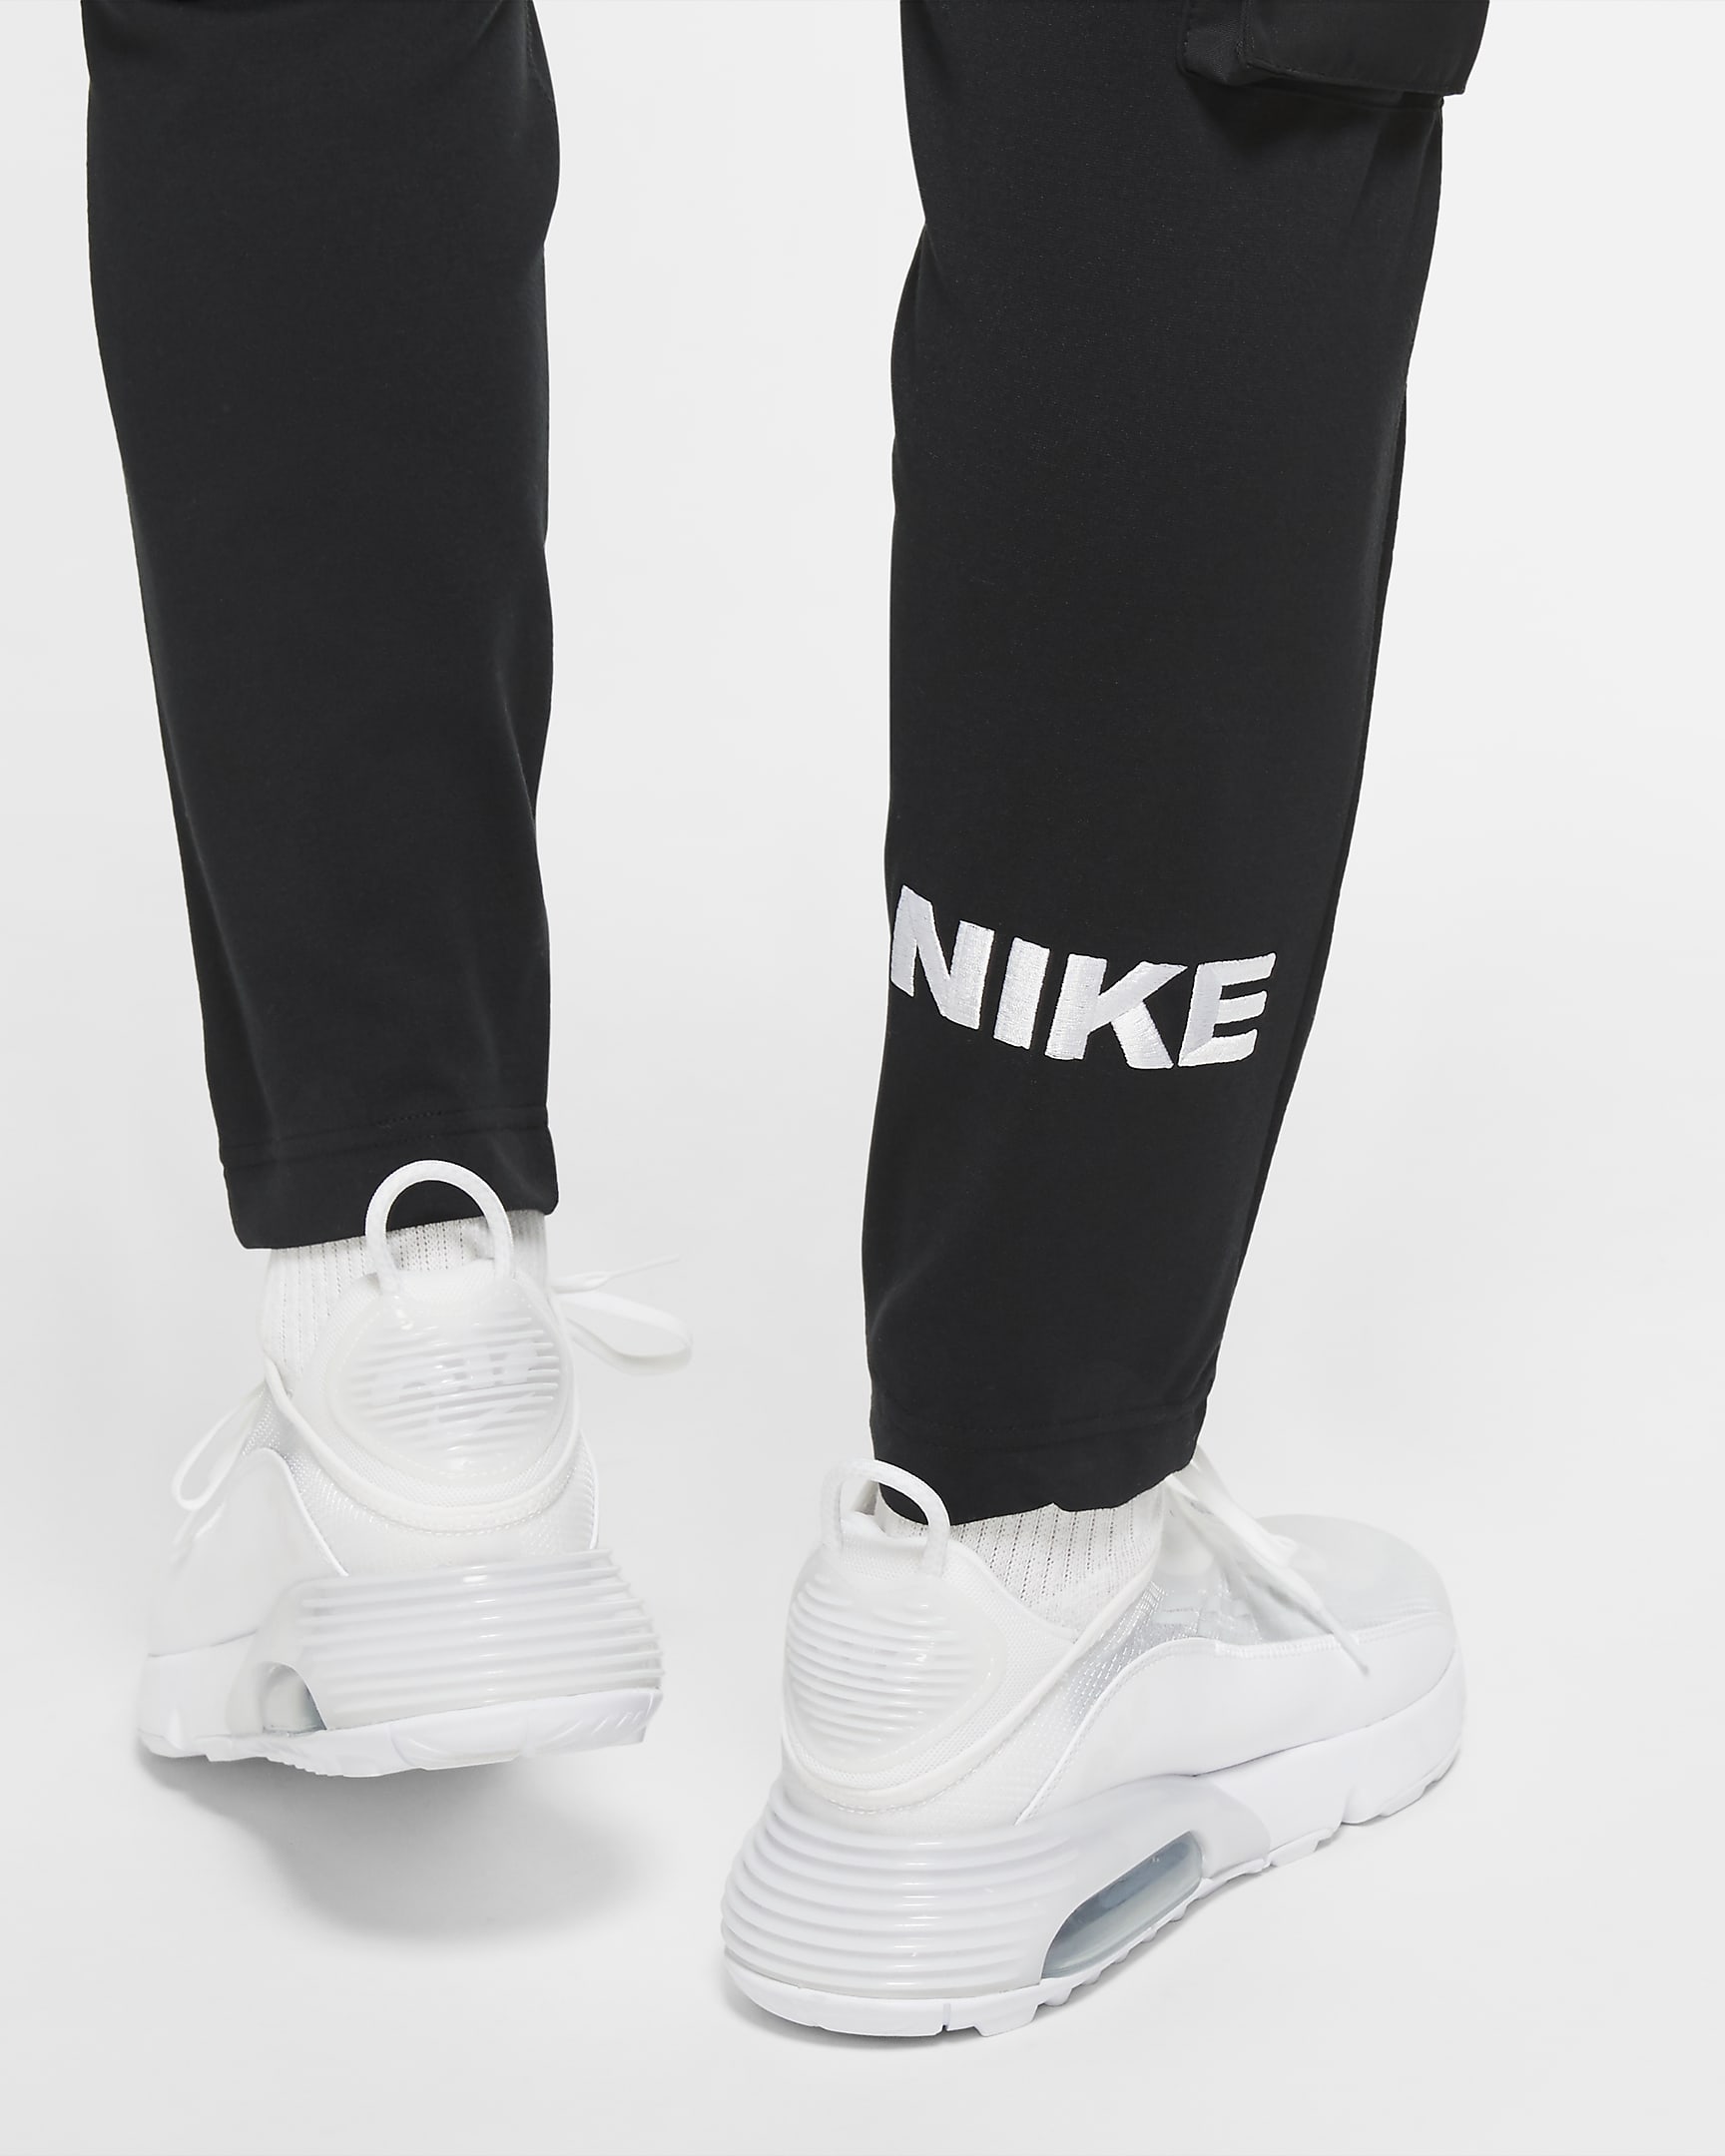 Nike Sportswear City Made Men's Cargo Pants. Nike.com